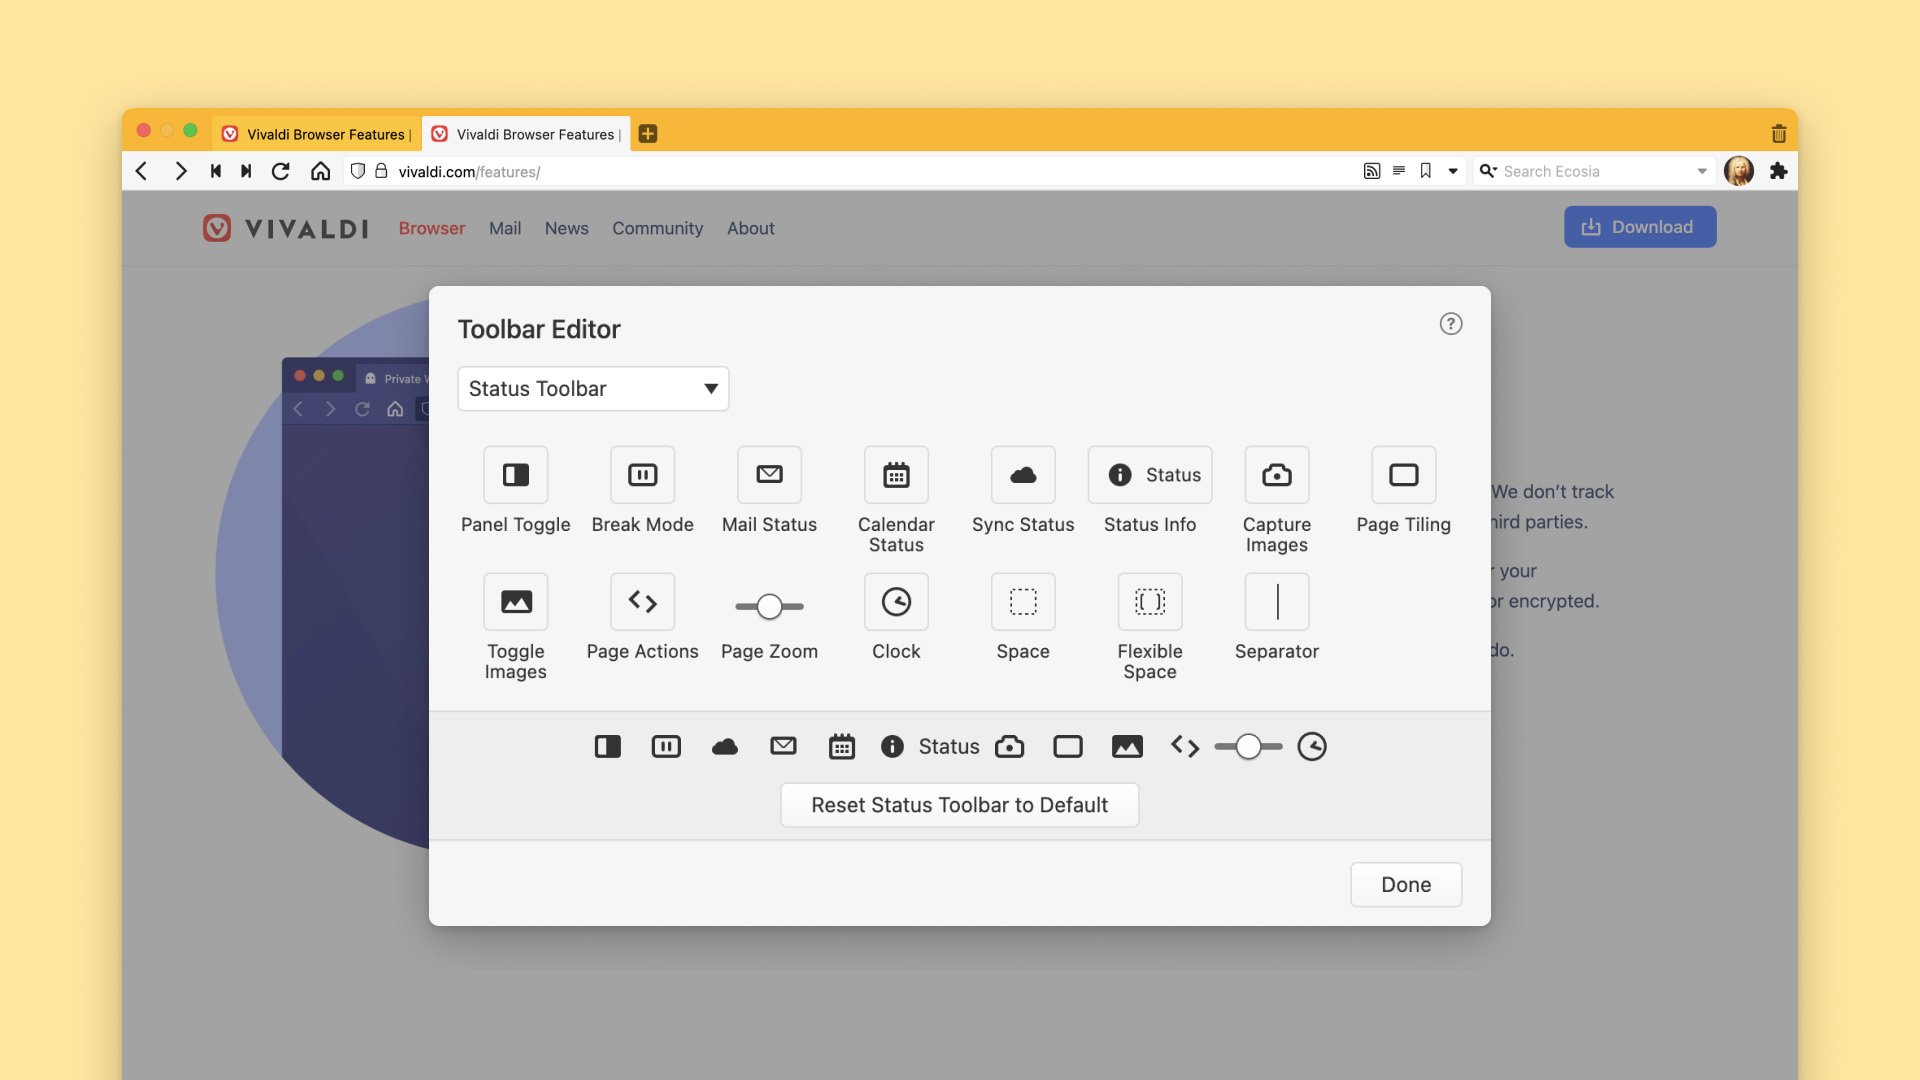 Toolbar Editor in Vivaldi browser